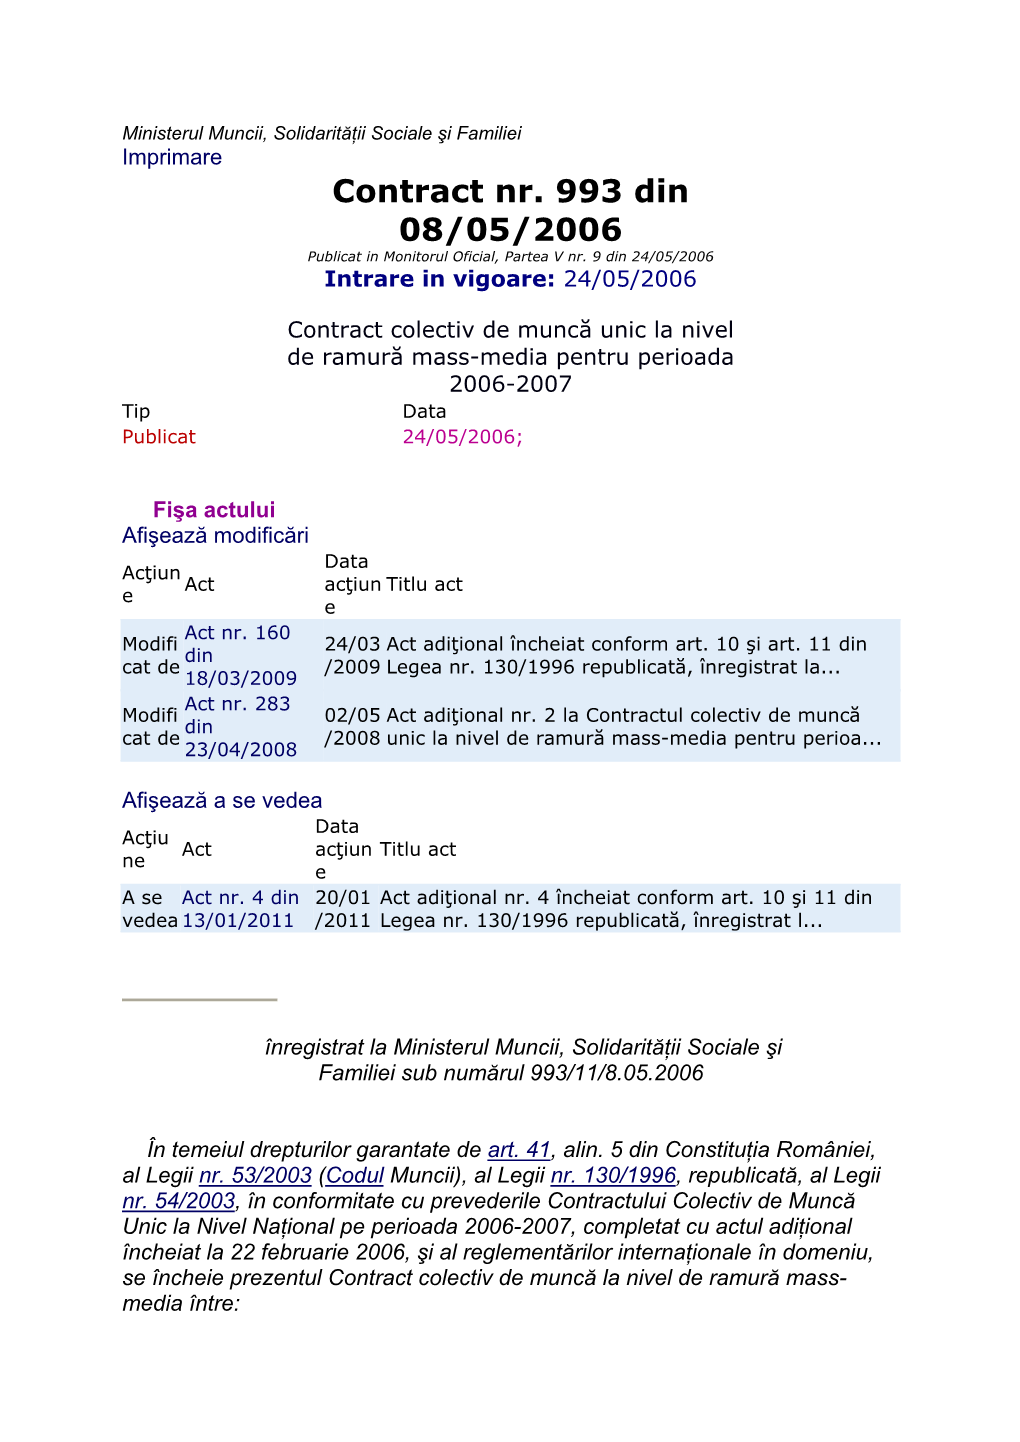 Contract Nr. 993 Din 08/05/2006 Publicat in Monitorul Oficial, Partea V Nr